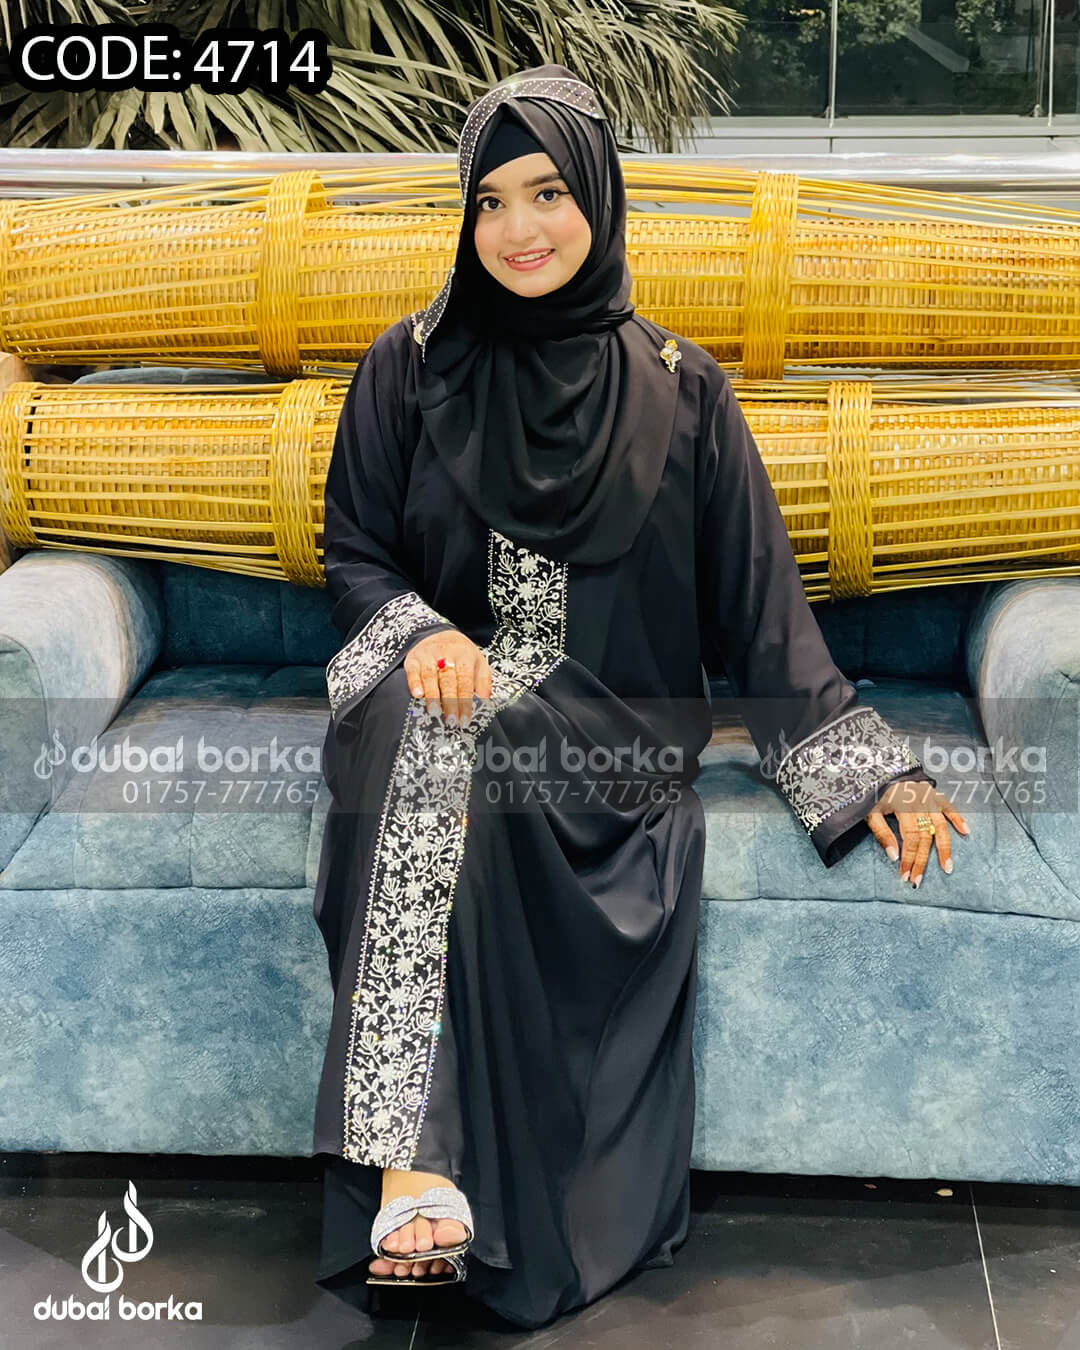 Nadiya Embroidery Borka Black-White With Hijab